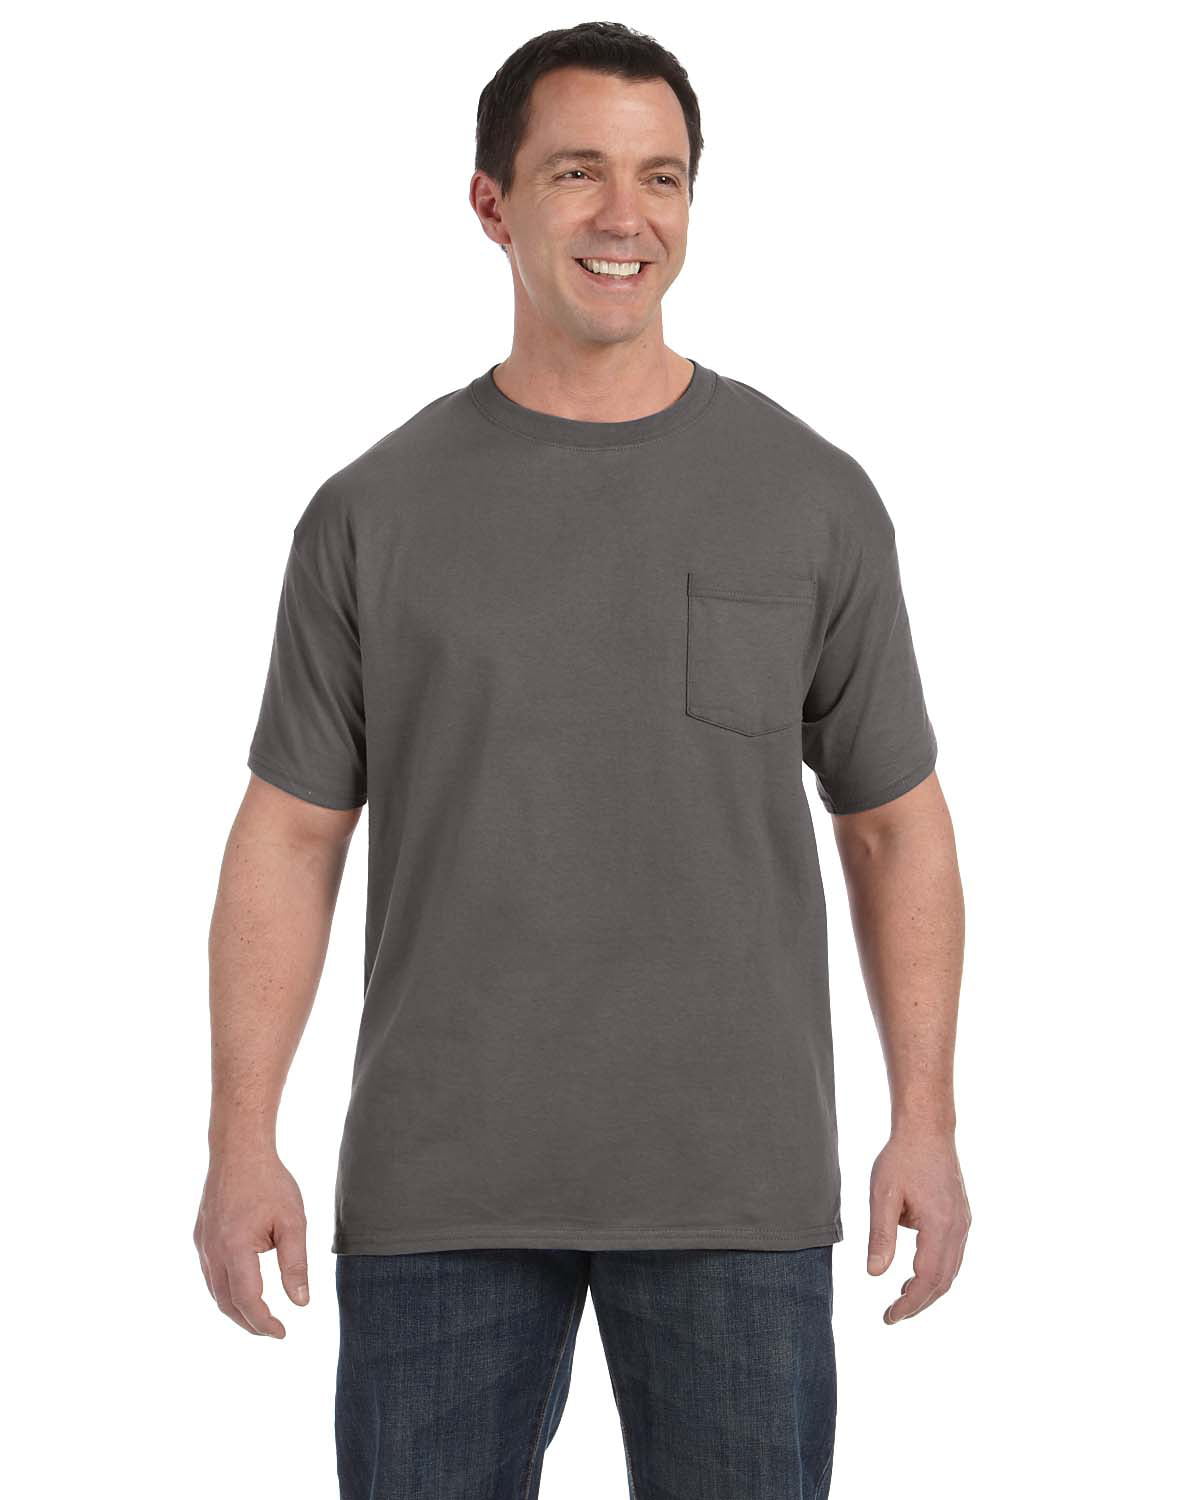 Hanes 6.1 oz H5590 2XL Deep Forest Tagless Pocket T-Shirt